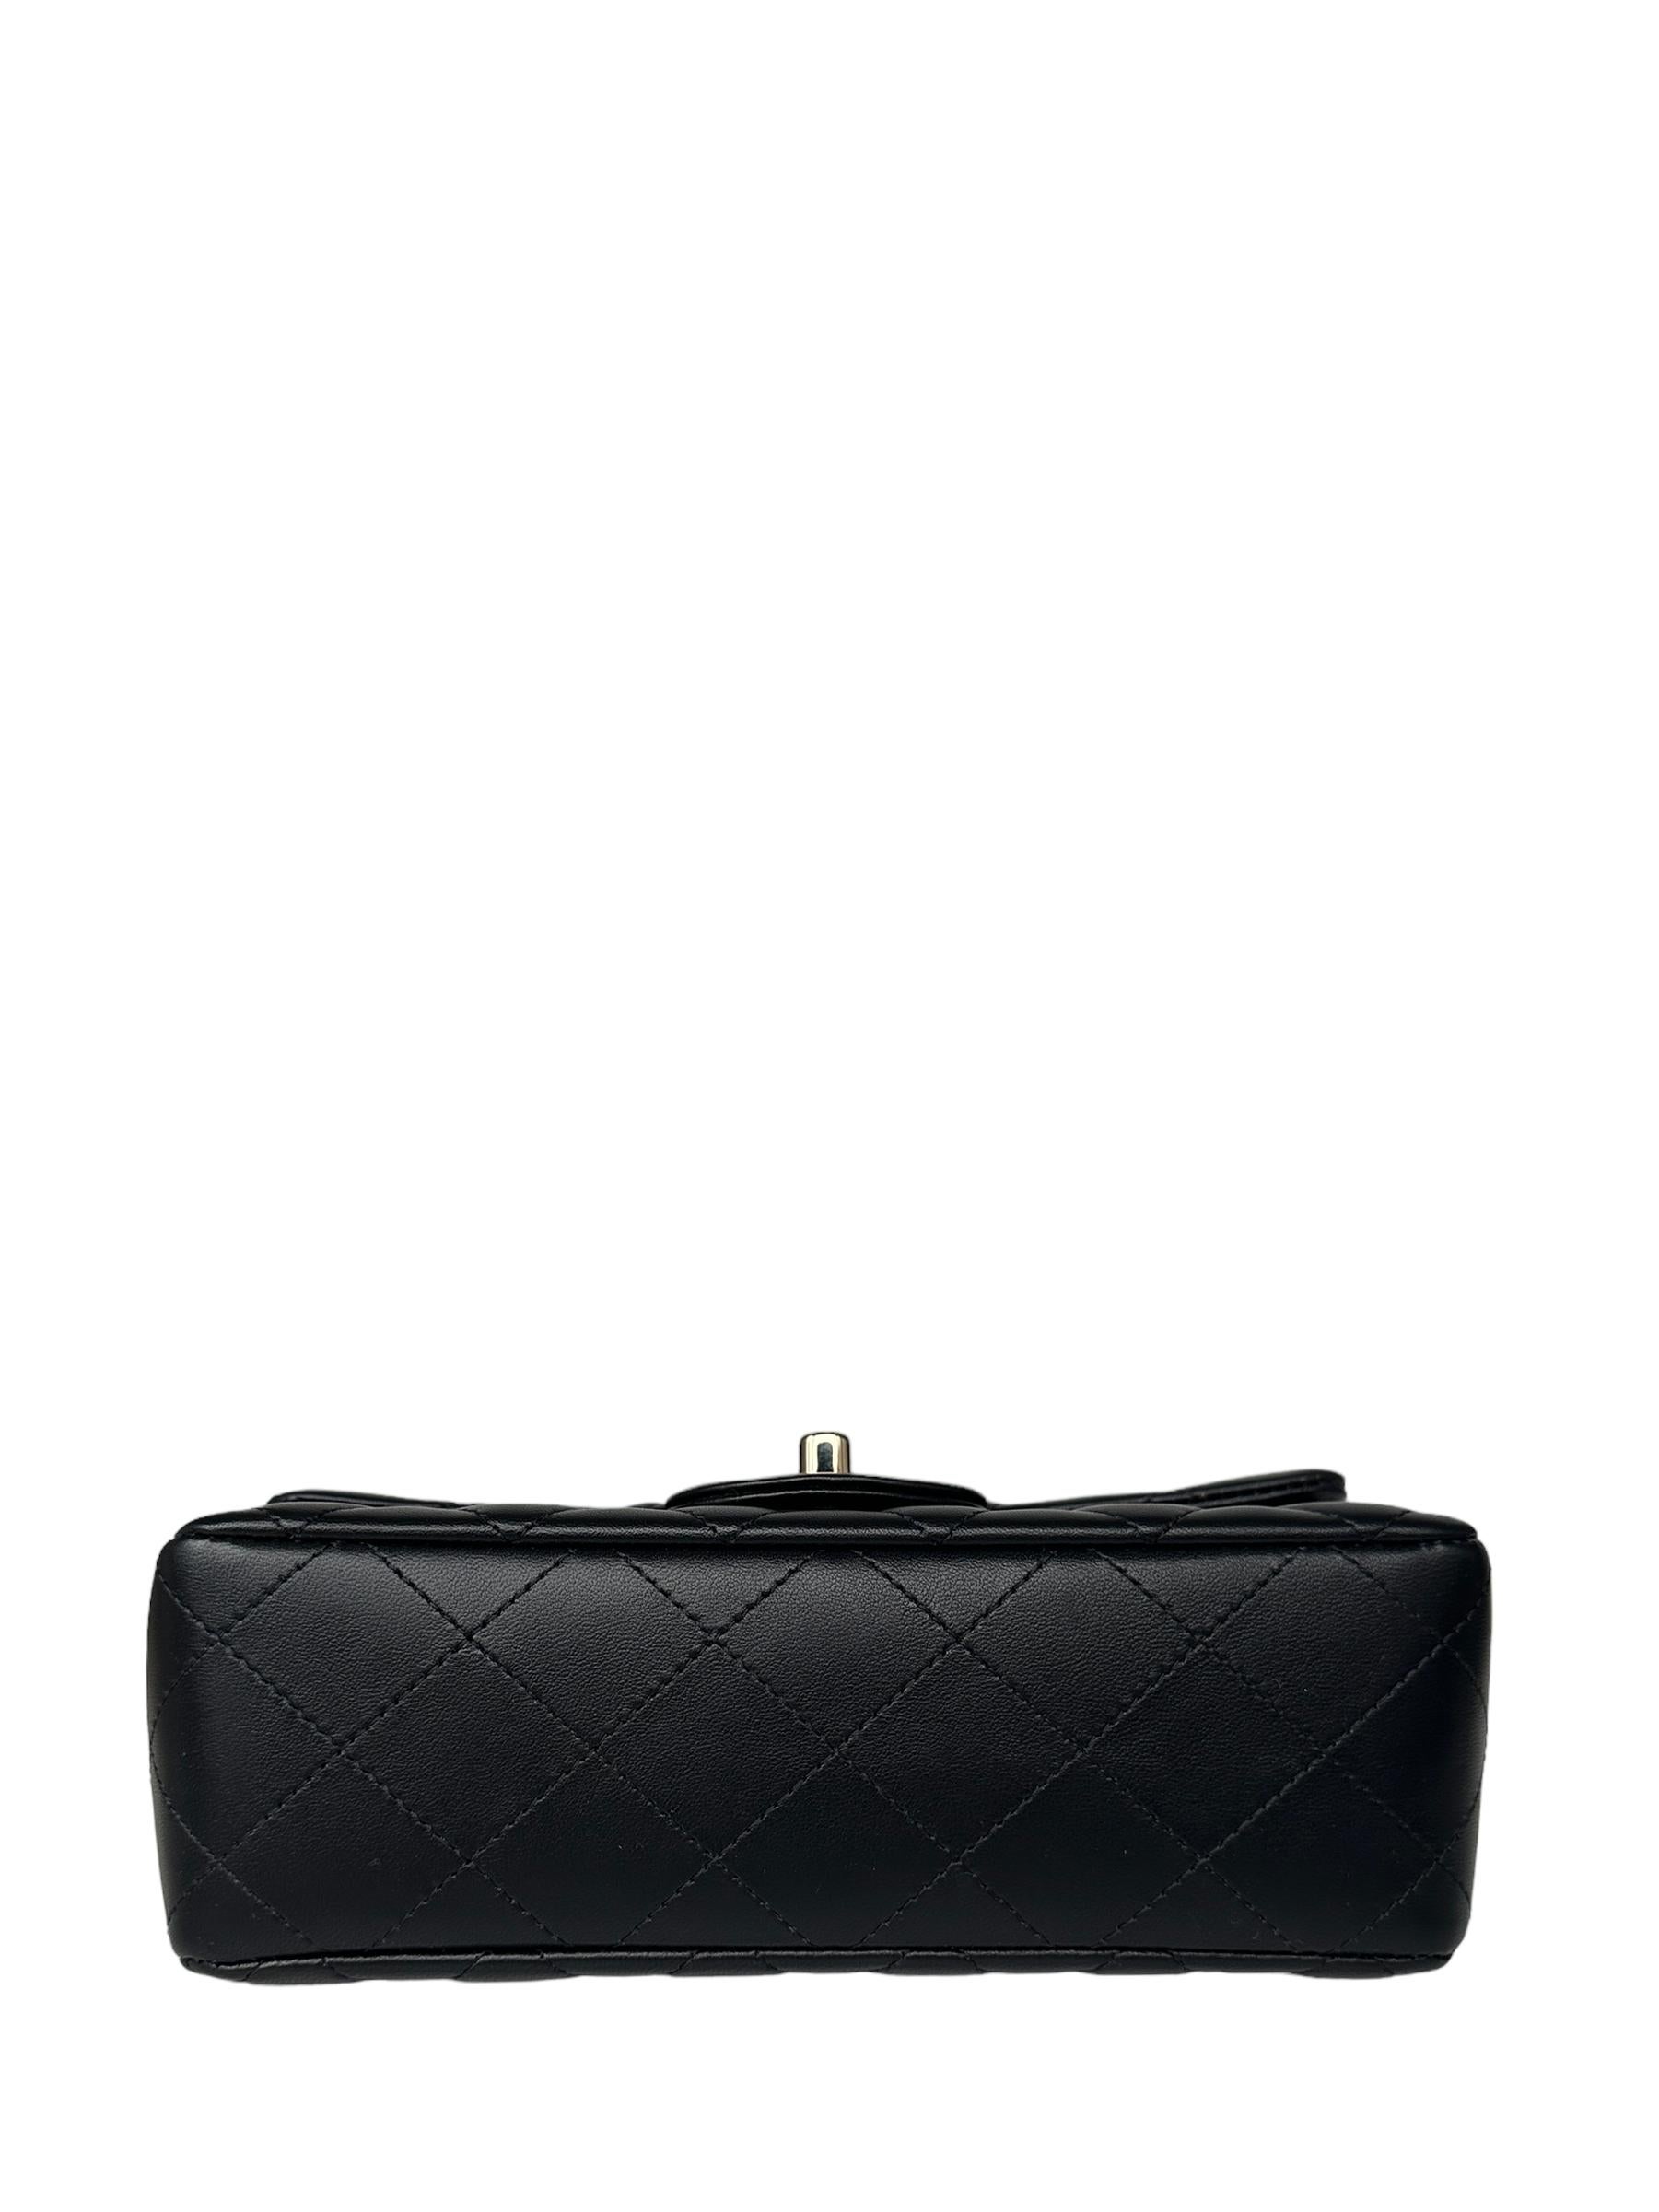 Women's Chanel Black Lambskin Quilted Rectangular Mini Flap Bag